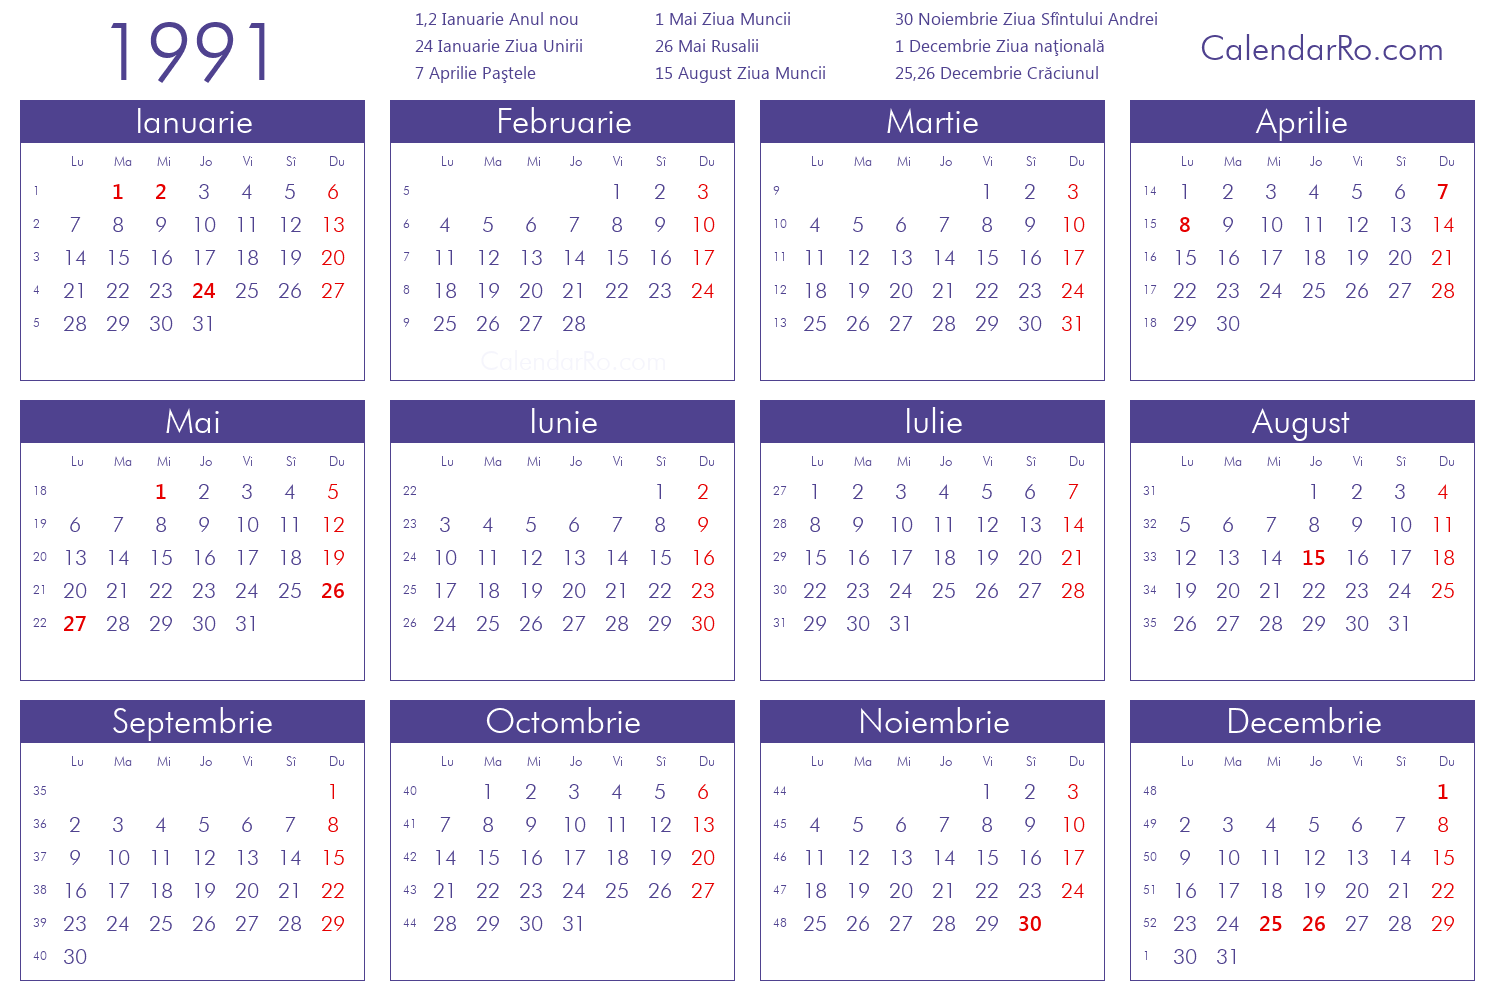 Calendar 1991